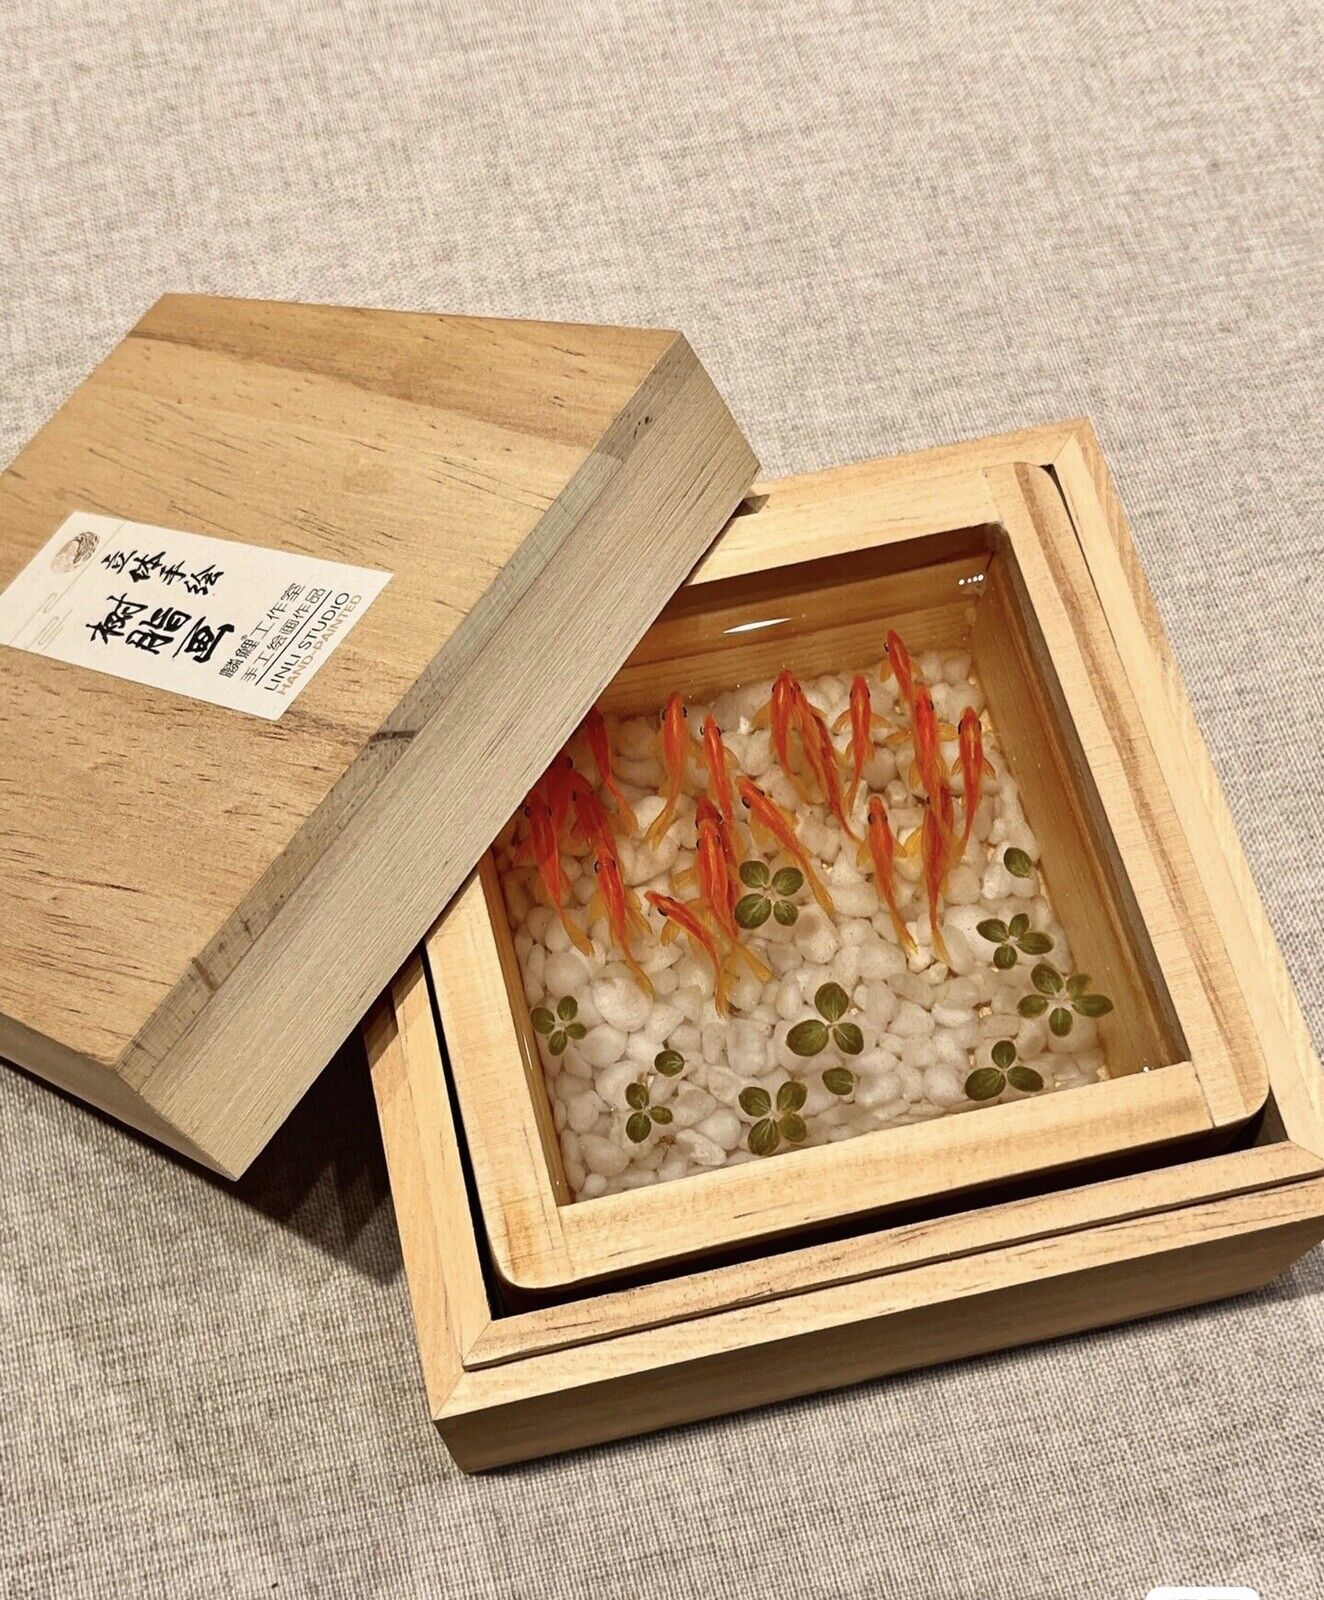 Hand Painting Resin Fish Art, little Koi in a box. 3D Resin Art.